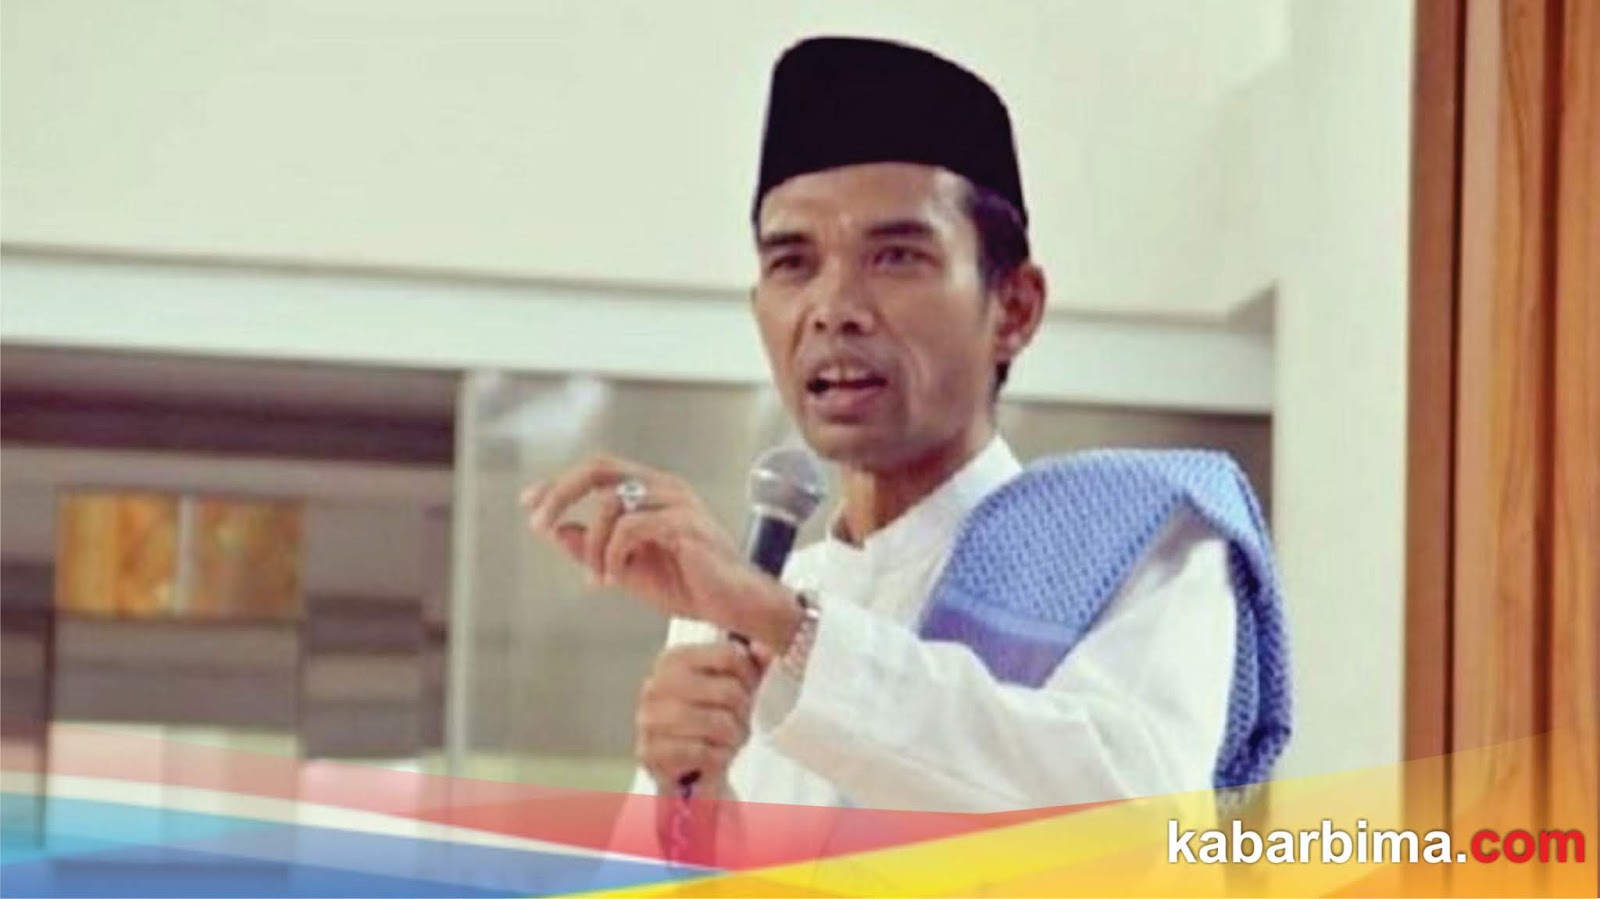 Pekan Depan Ustadz Abdul Somad Akan Ceramah Di Kota Bima Kabar Bima Portal Berita Bima Terbaru